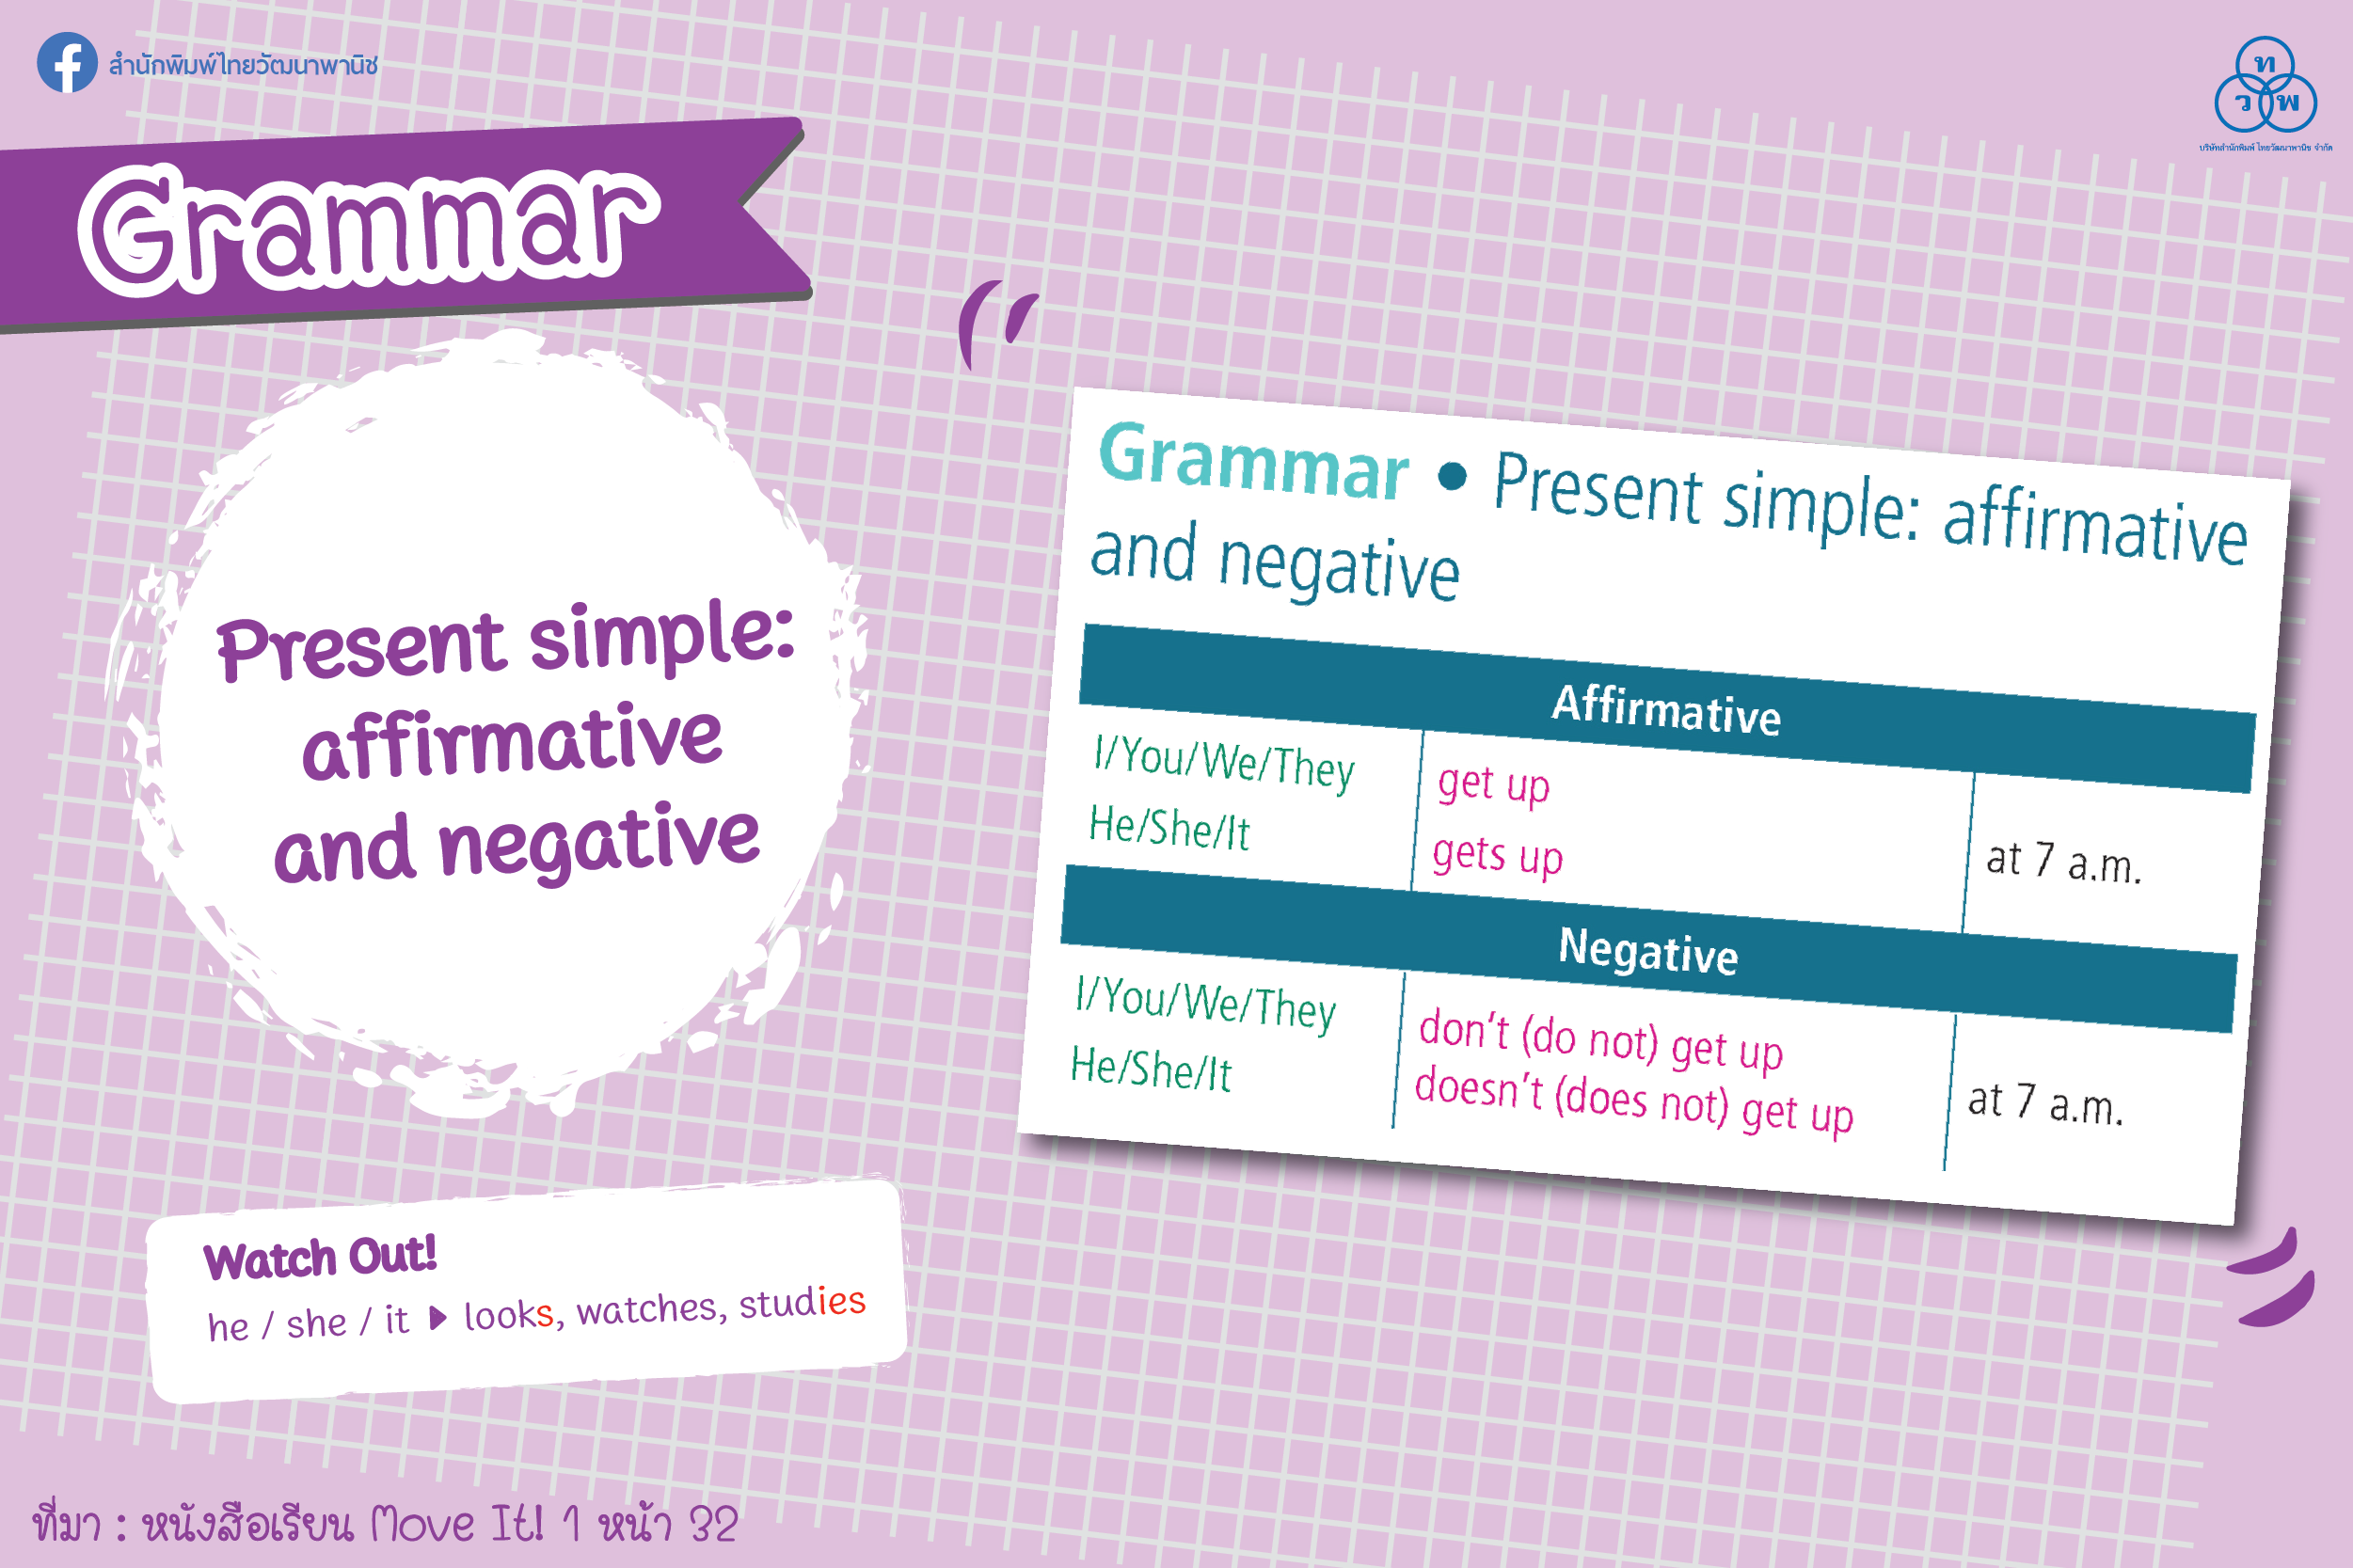 Grammar: Present simple: affirmative and negative